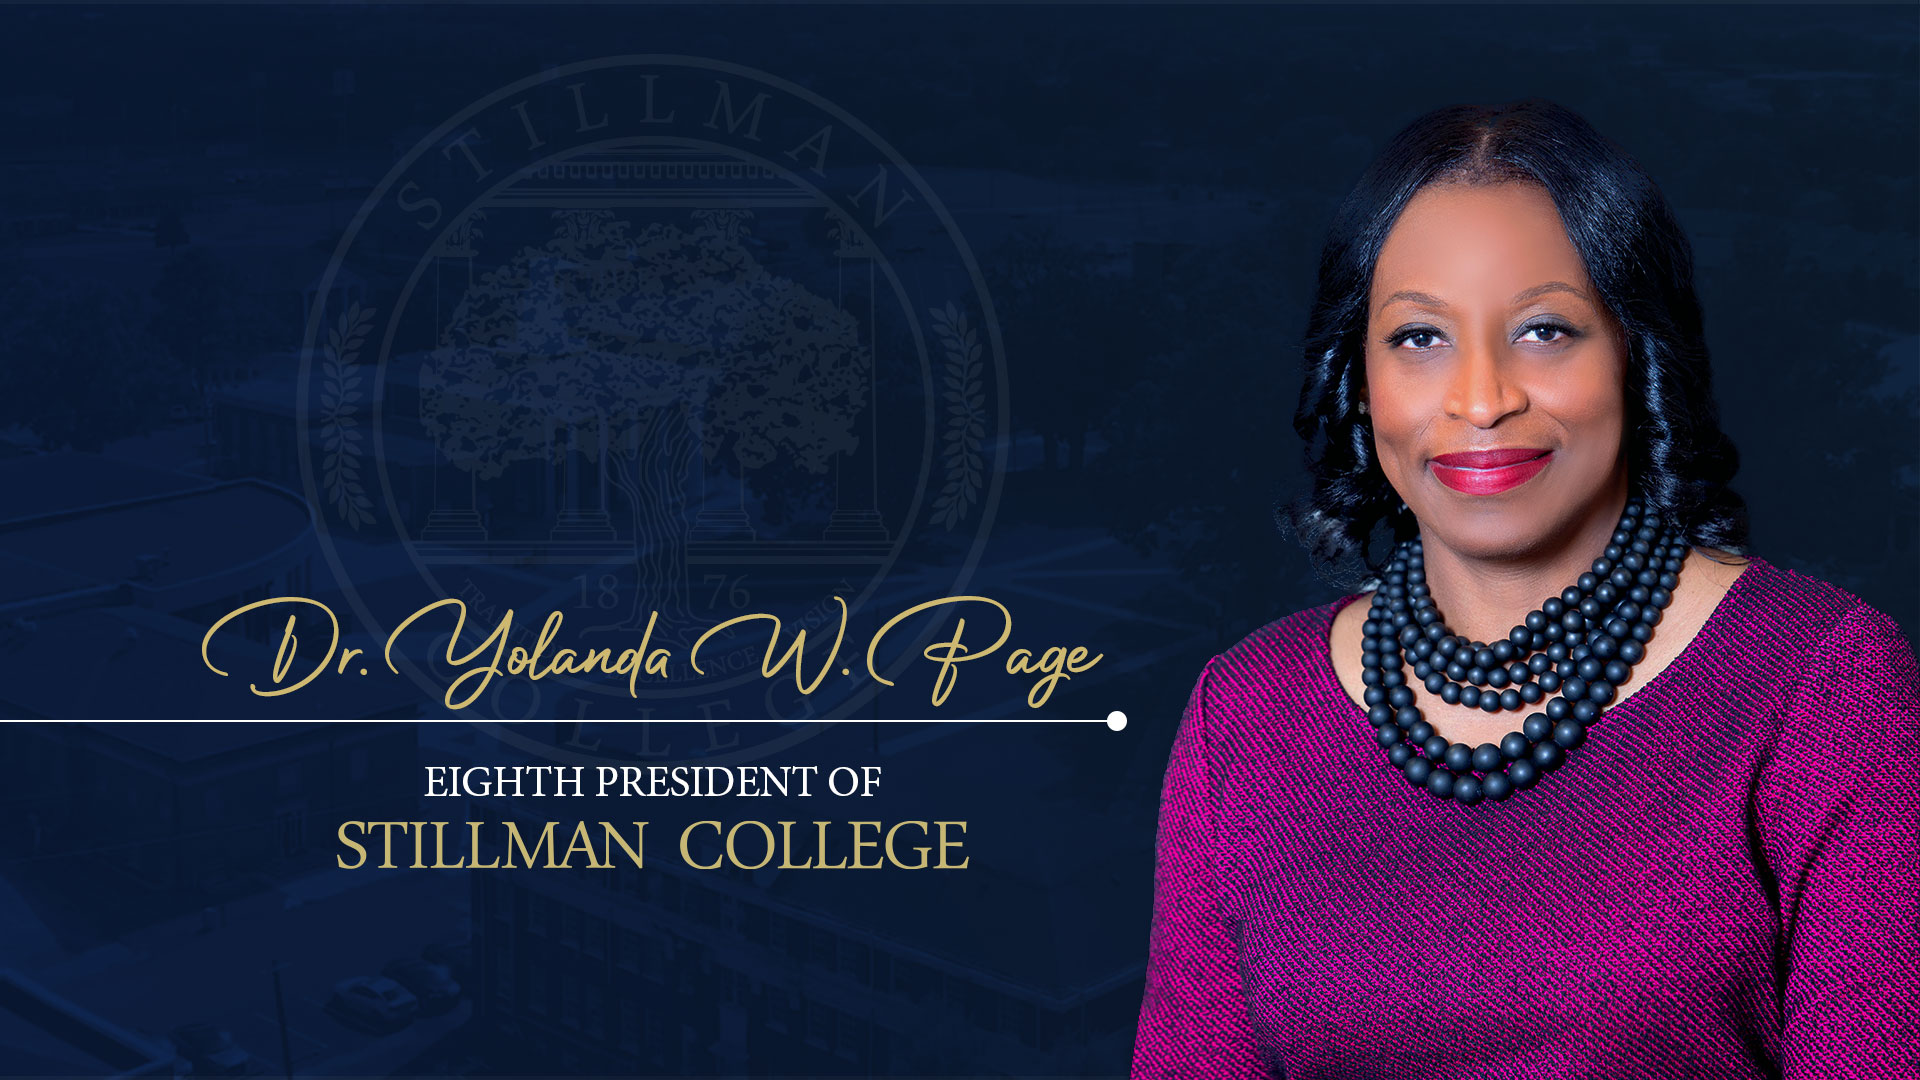 Dr. Yolanda W. Page named president of Stillman College